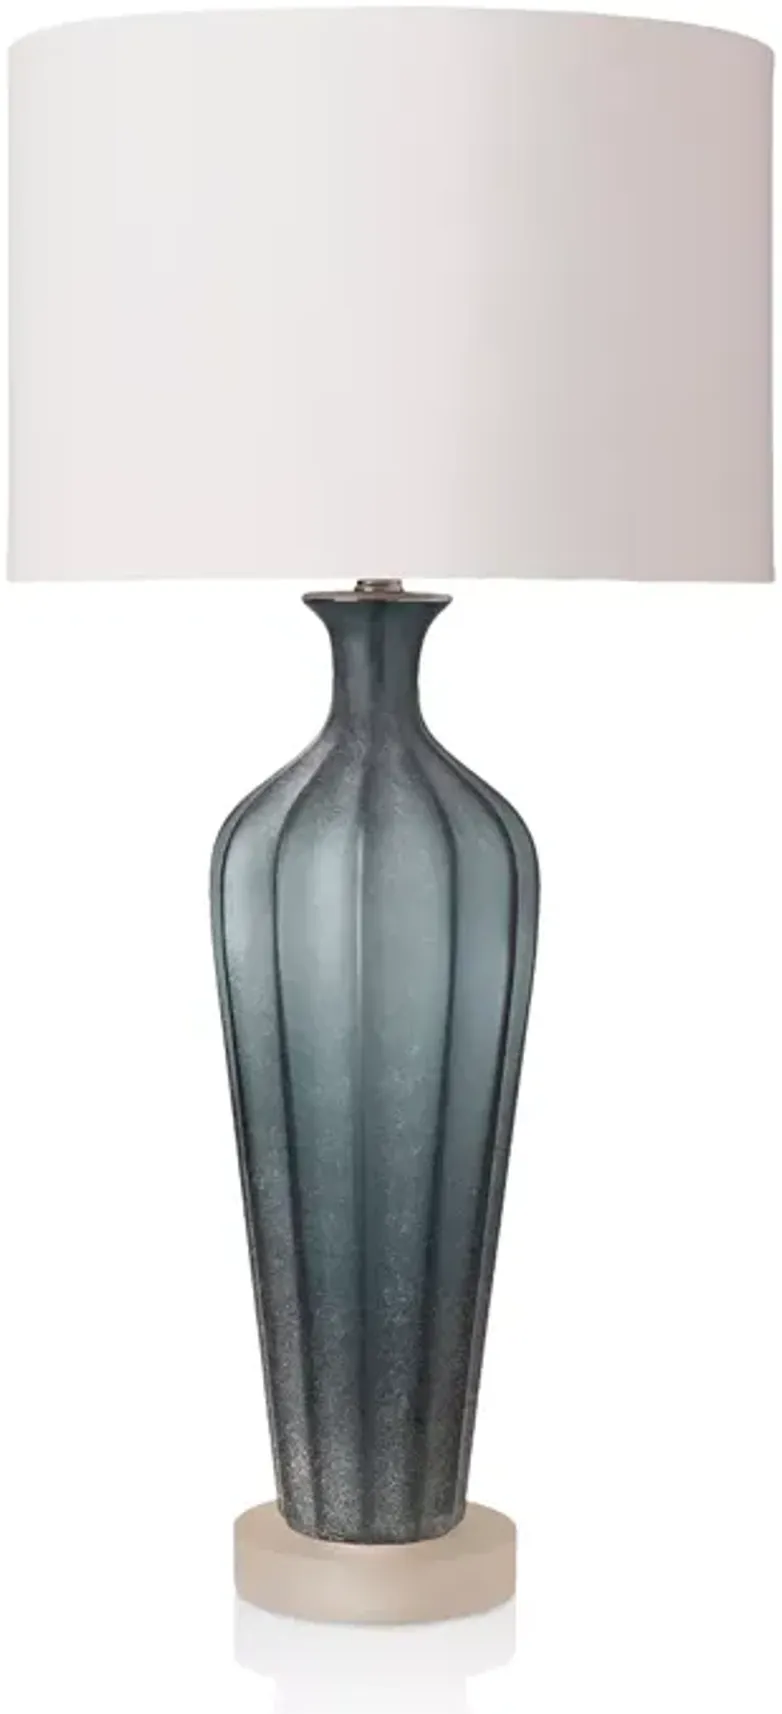 Surya Sloane Table Lamp